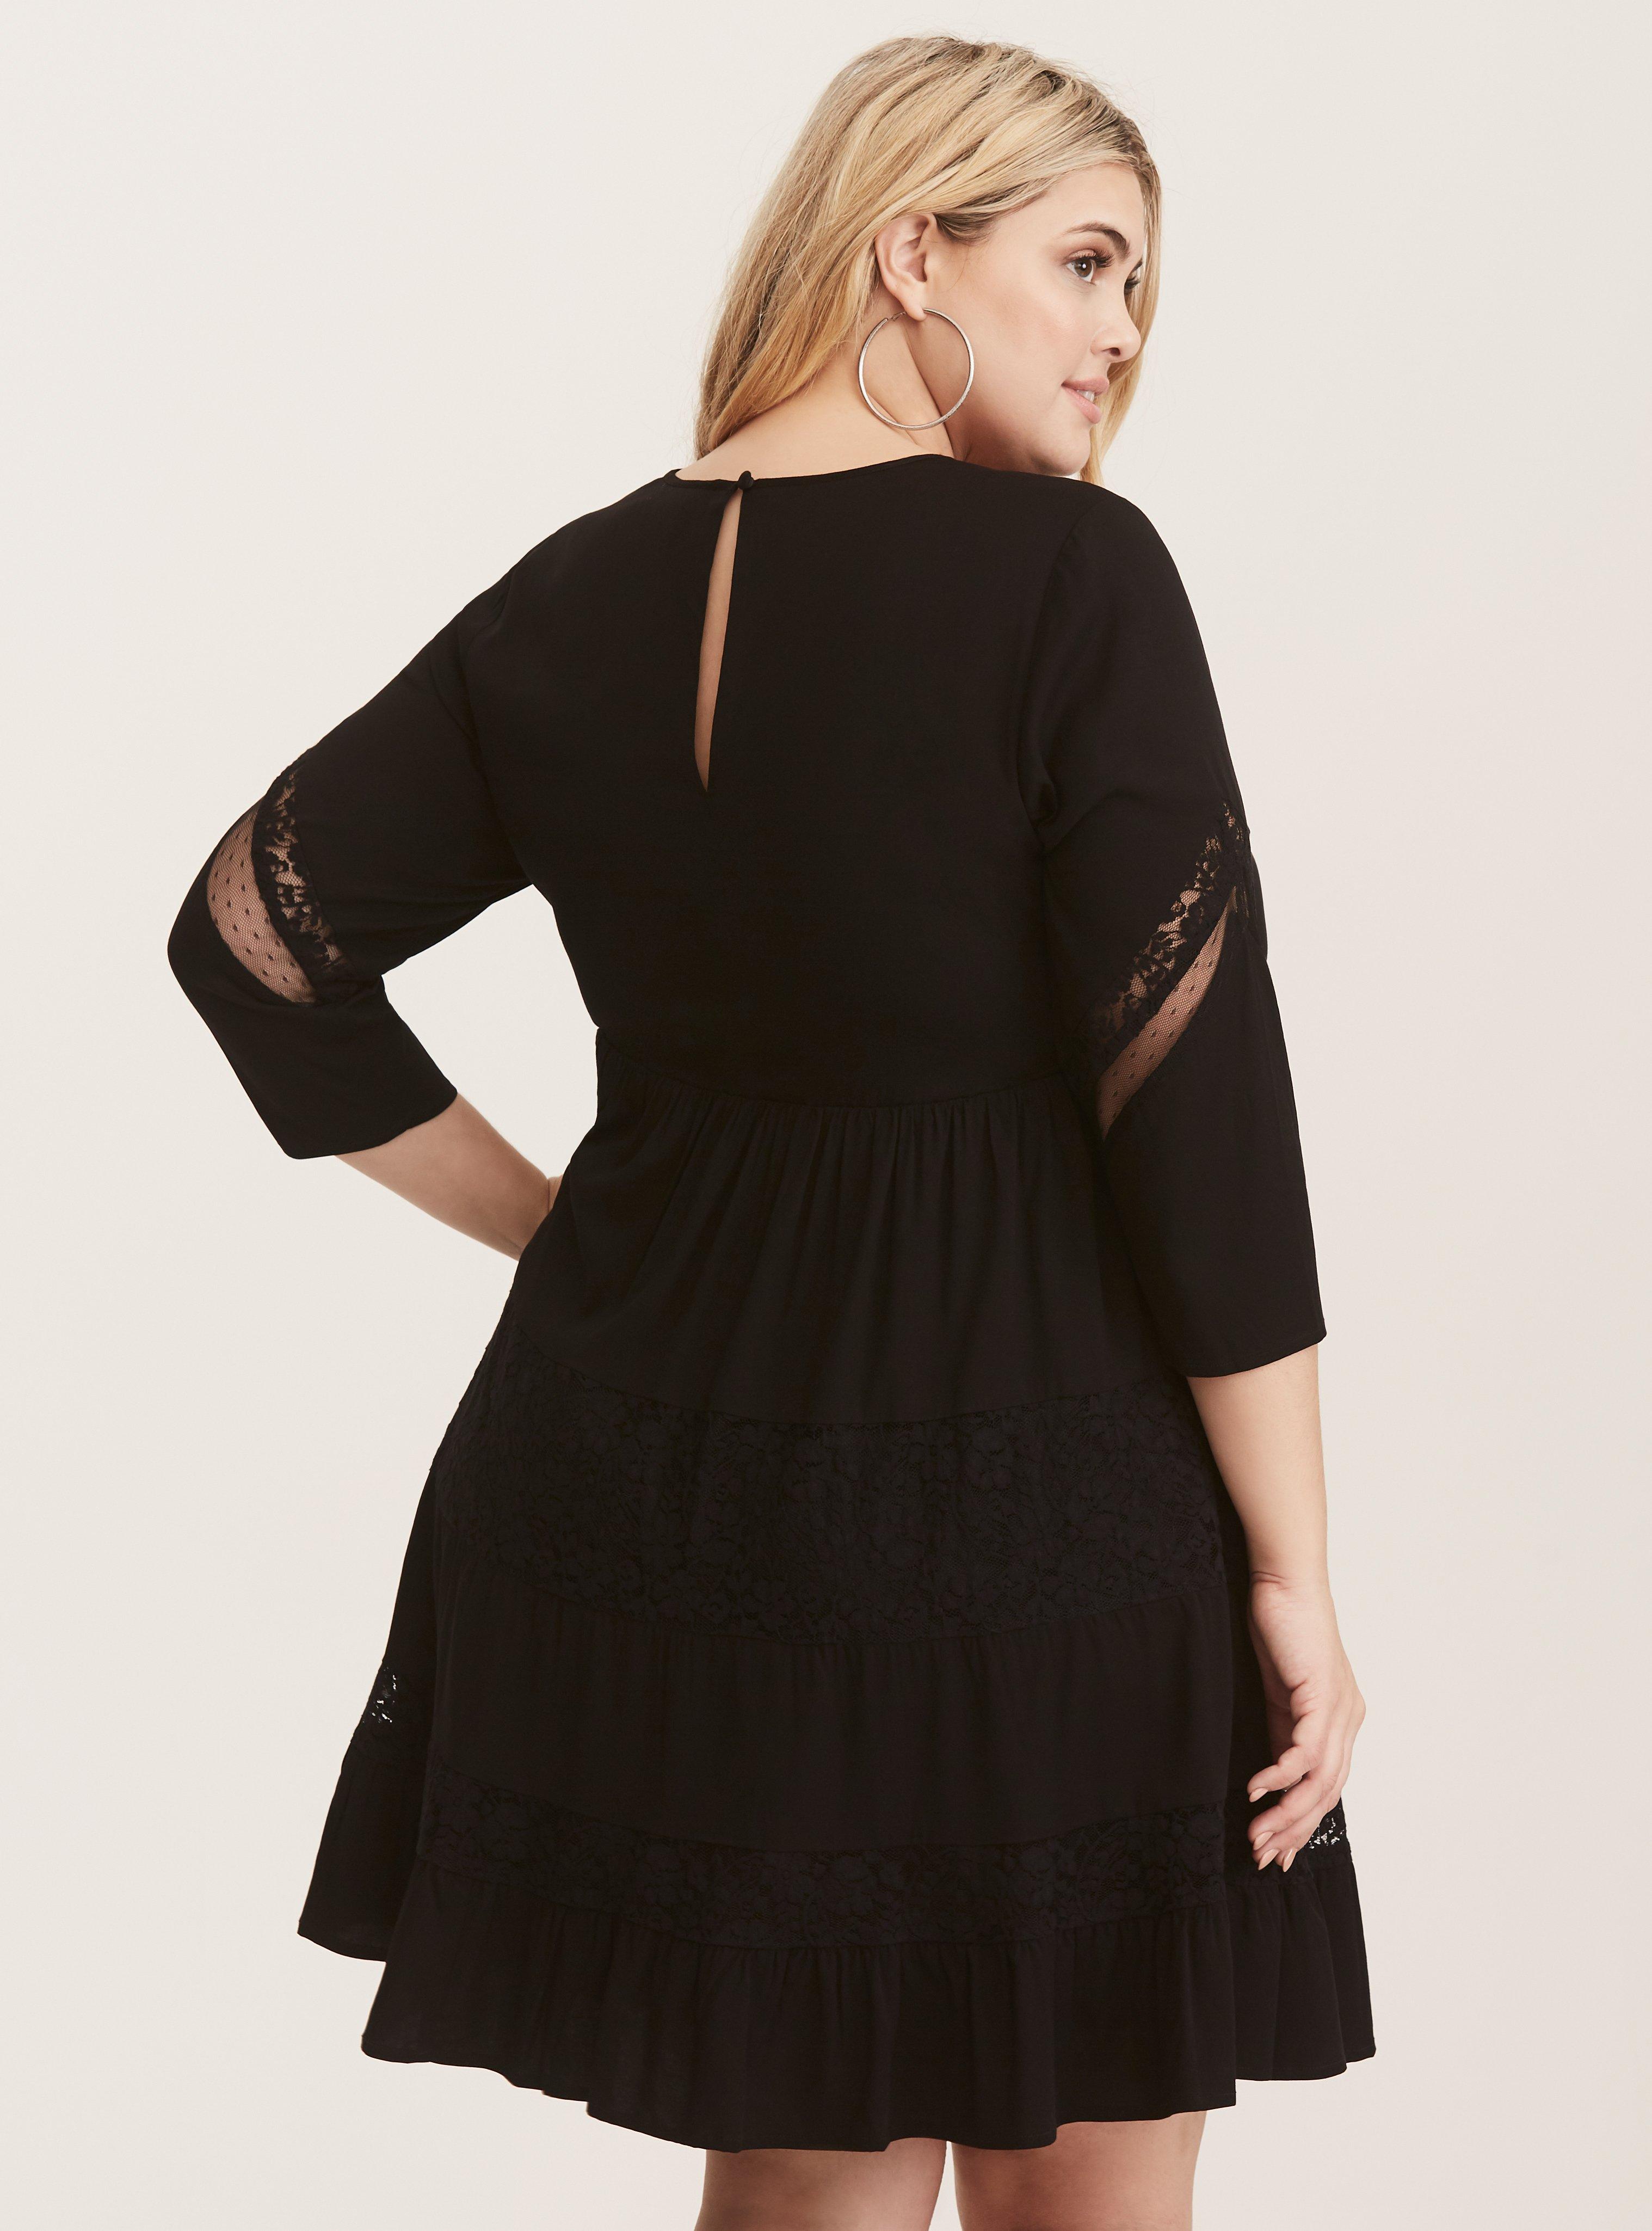 Plus Size - Black Lace Inset Long Sleeved Challis Skater Dress - Torrid